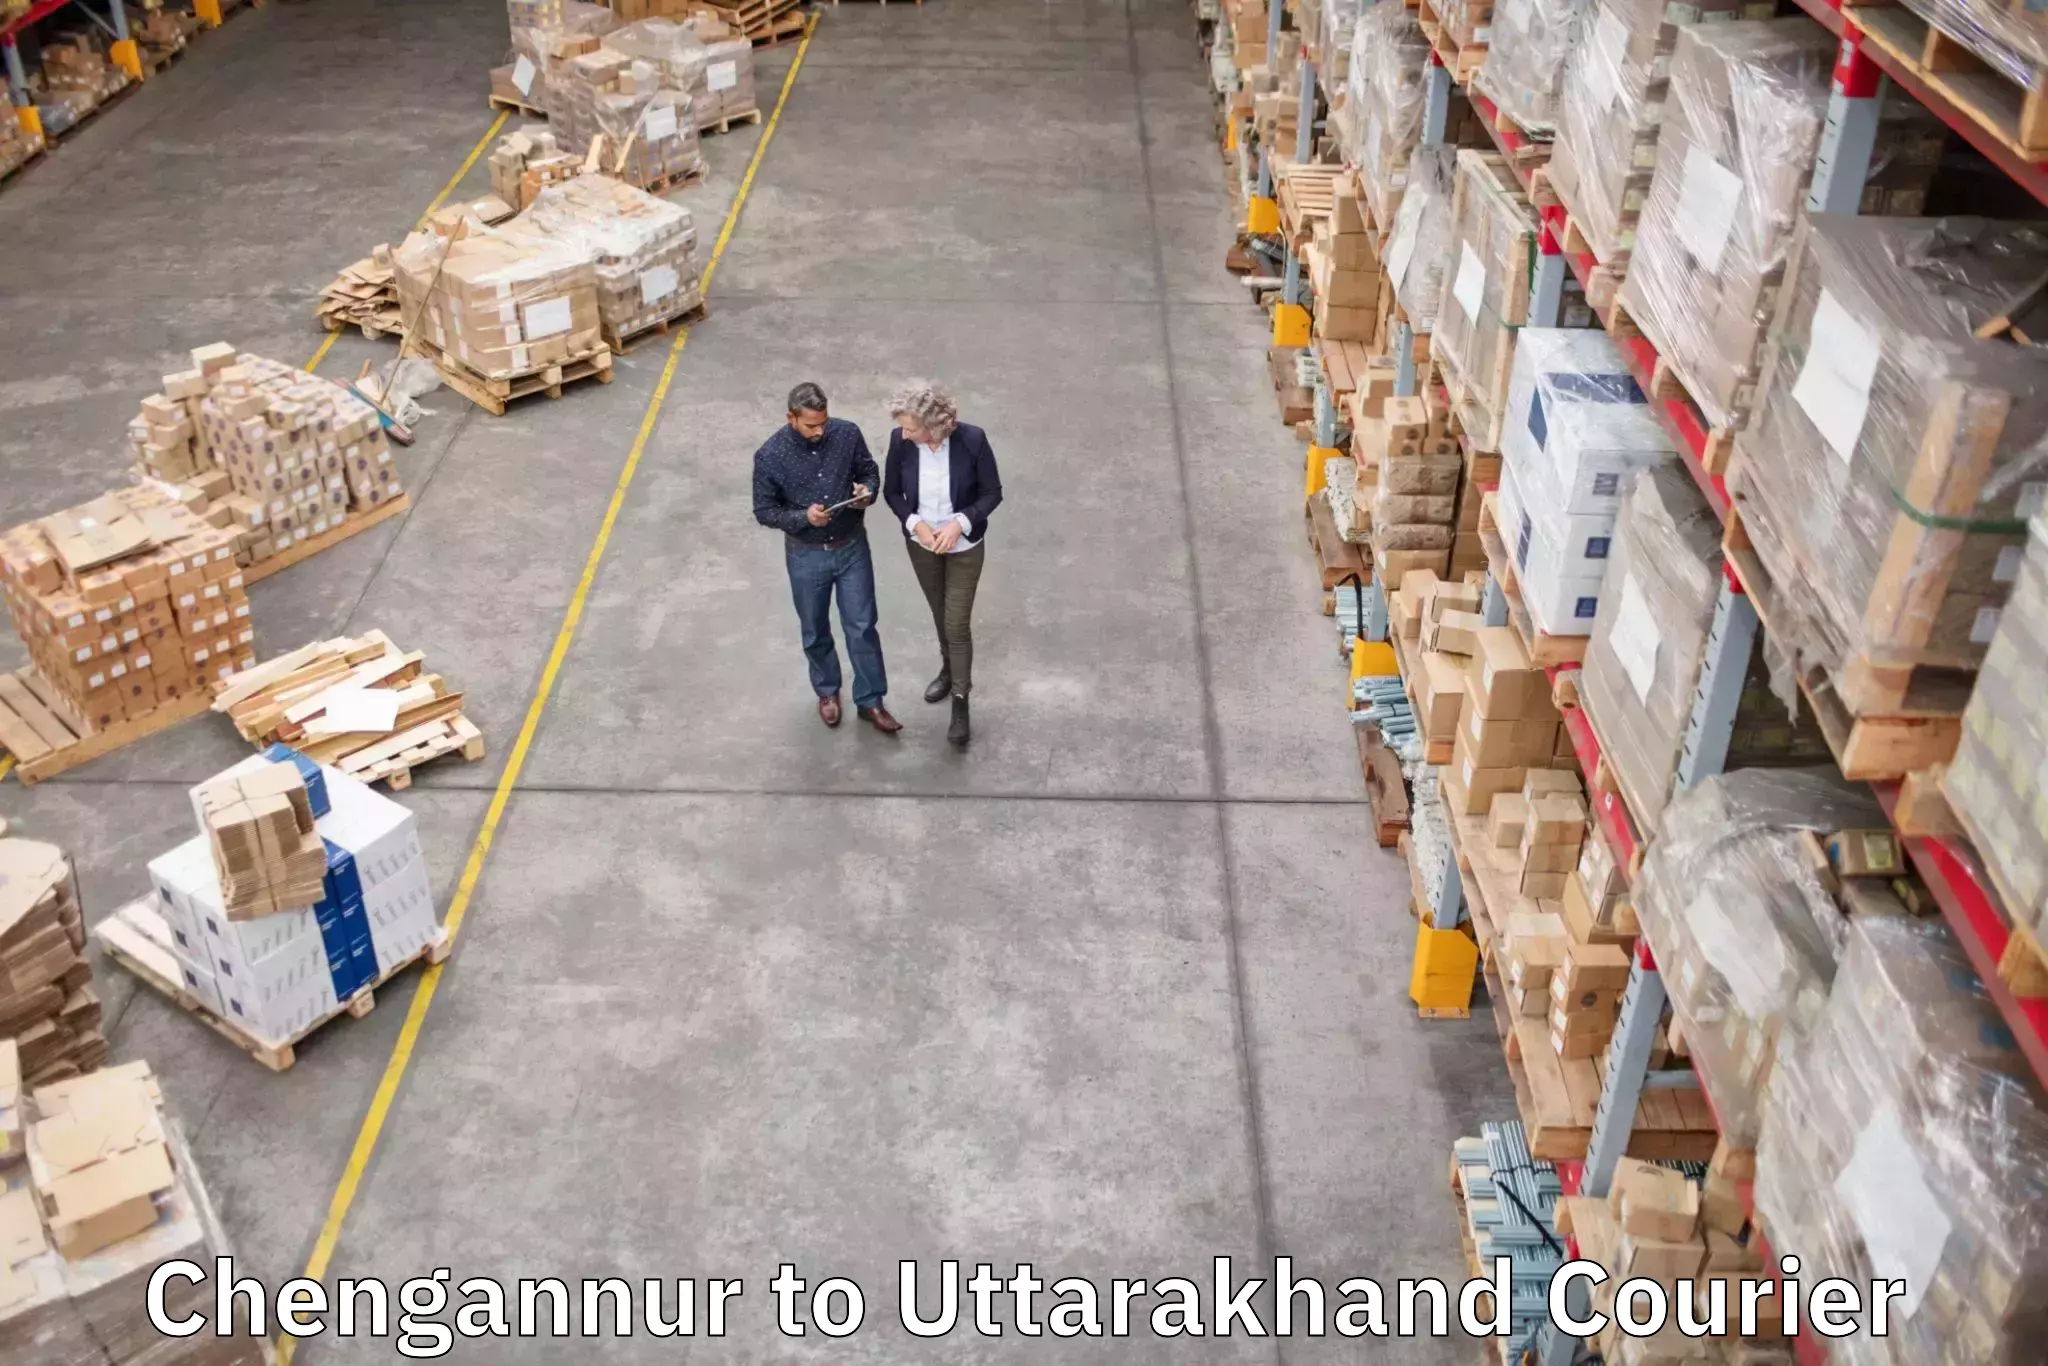 Baggage shipping experts Chengannur to Uttarakhand